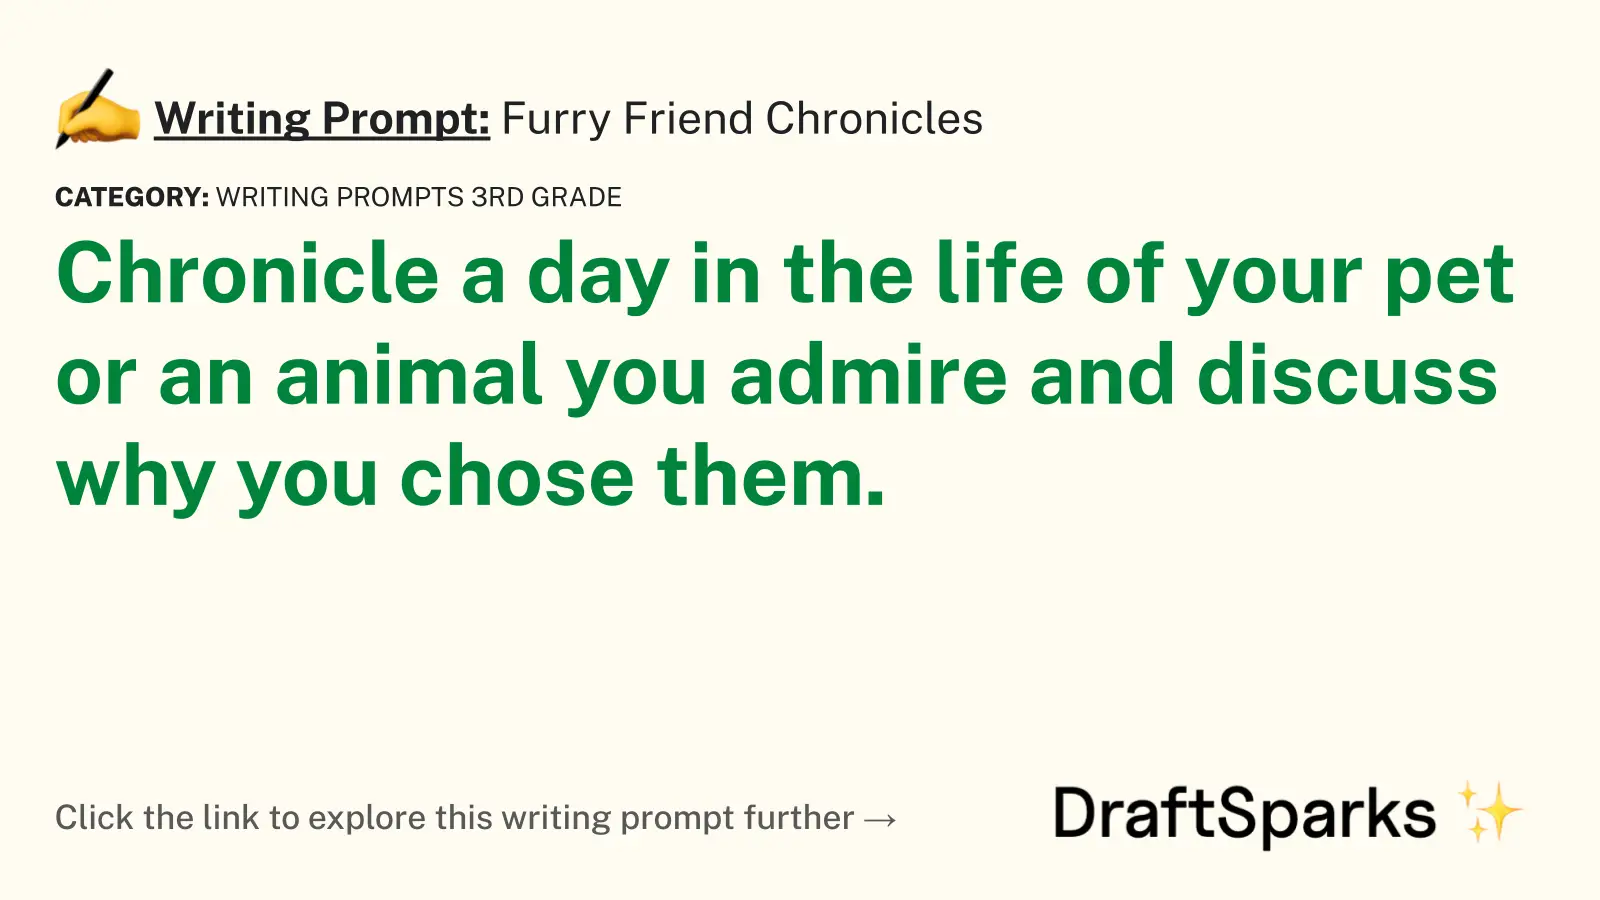 Furry Friend Chronicles